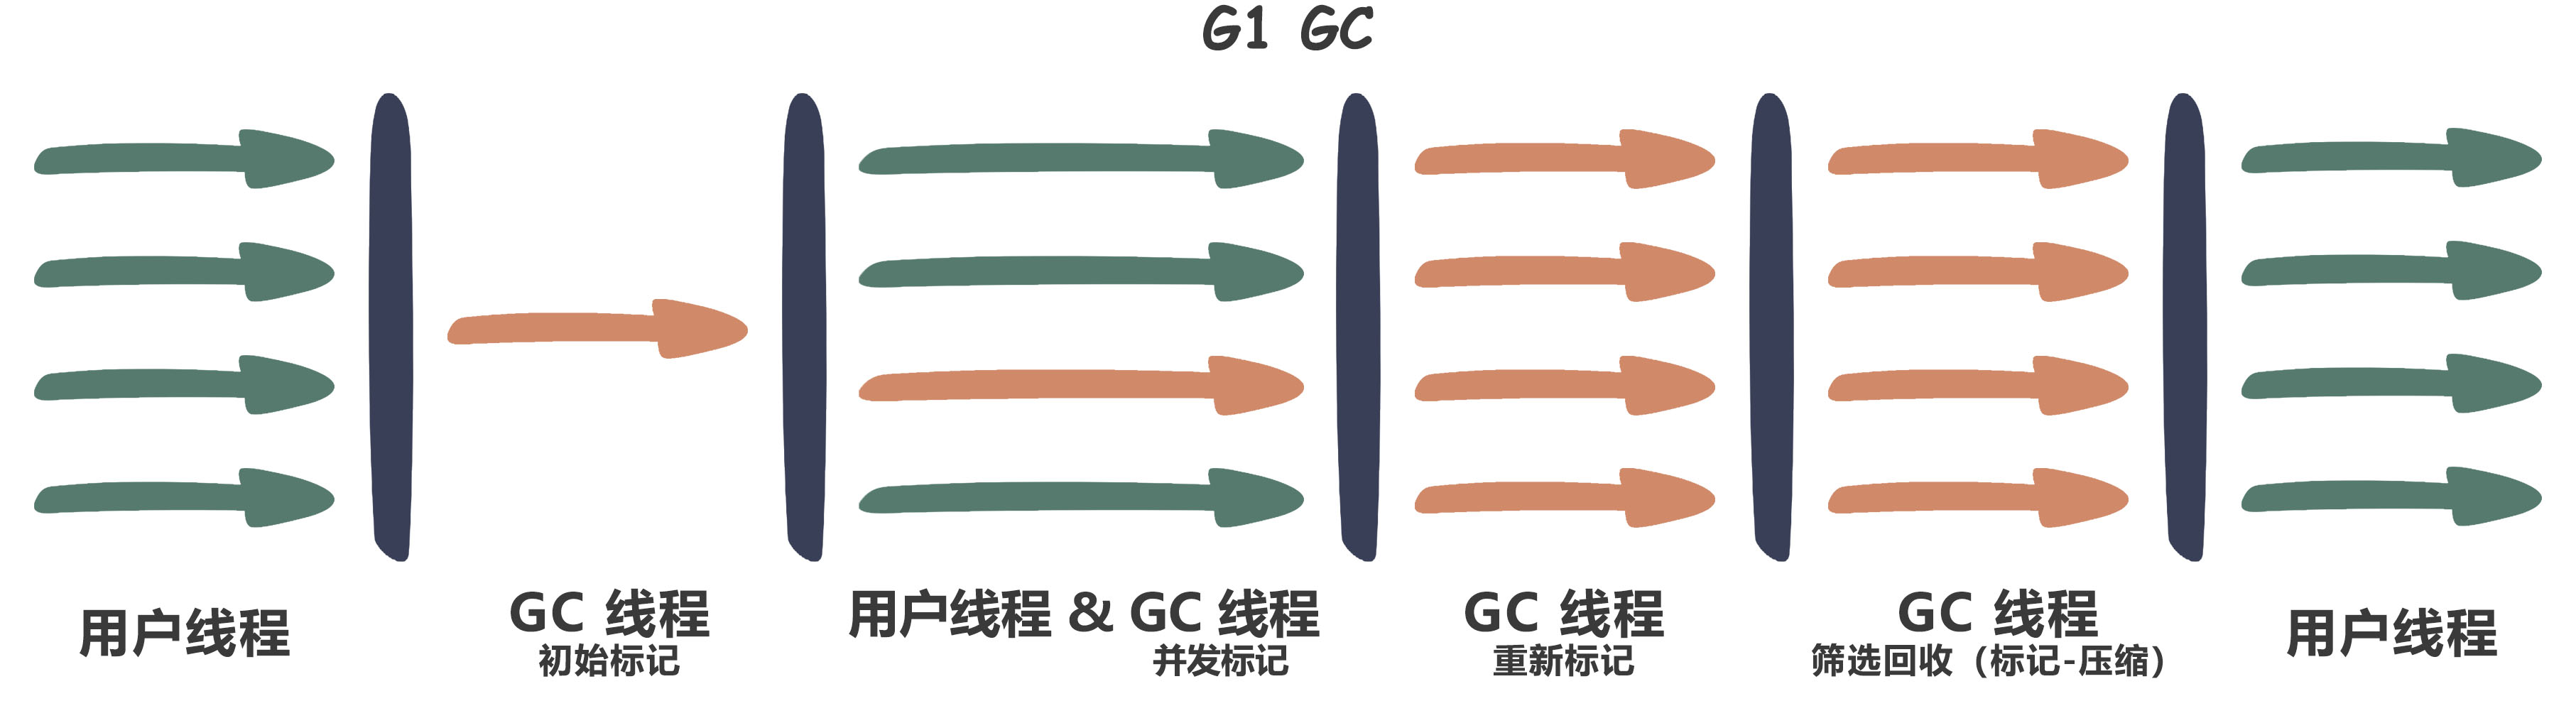 G1GC